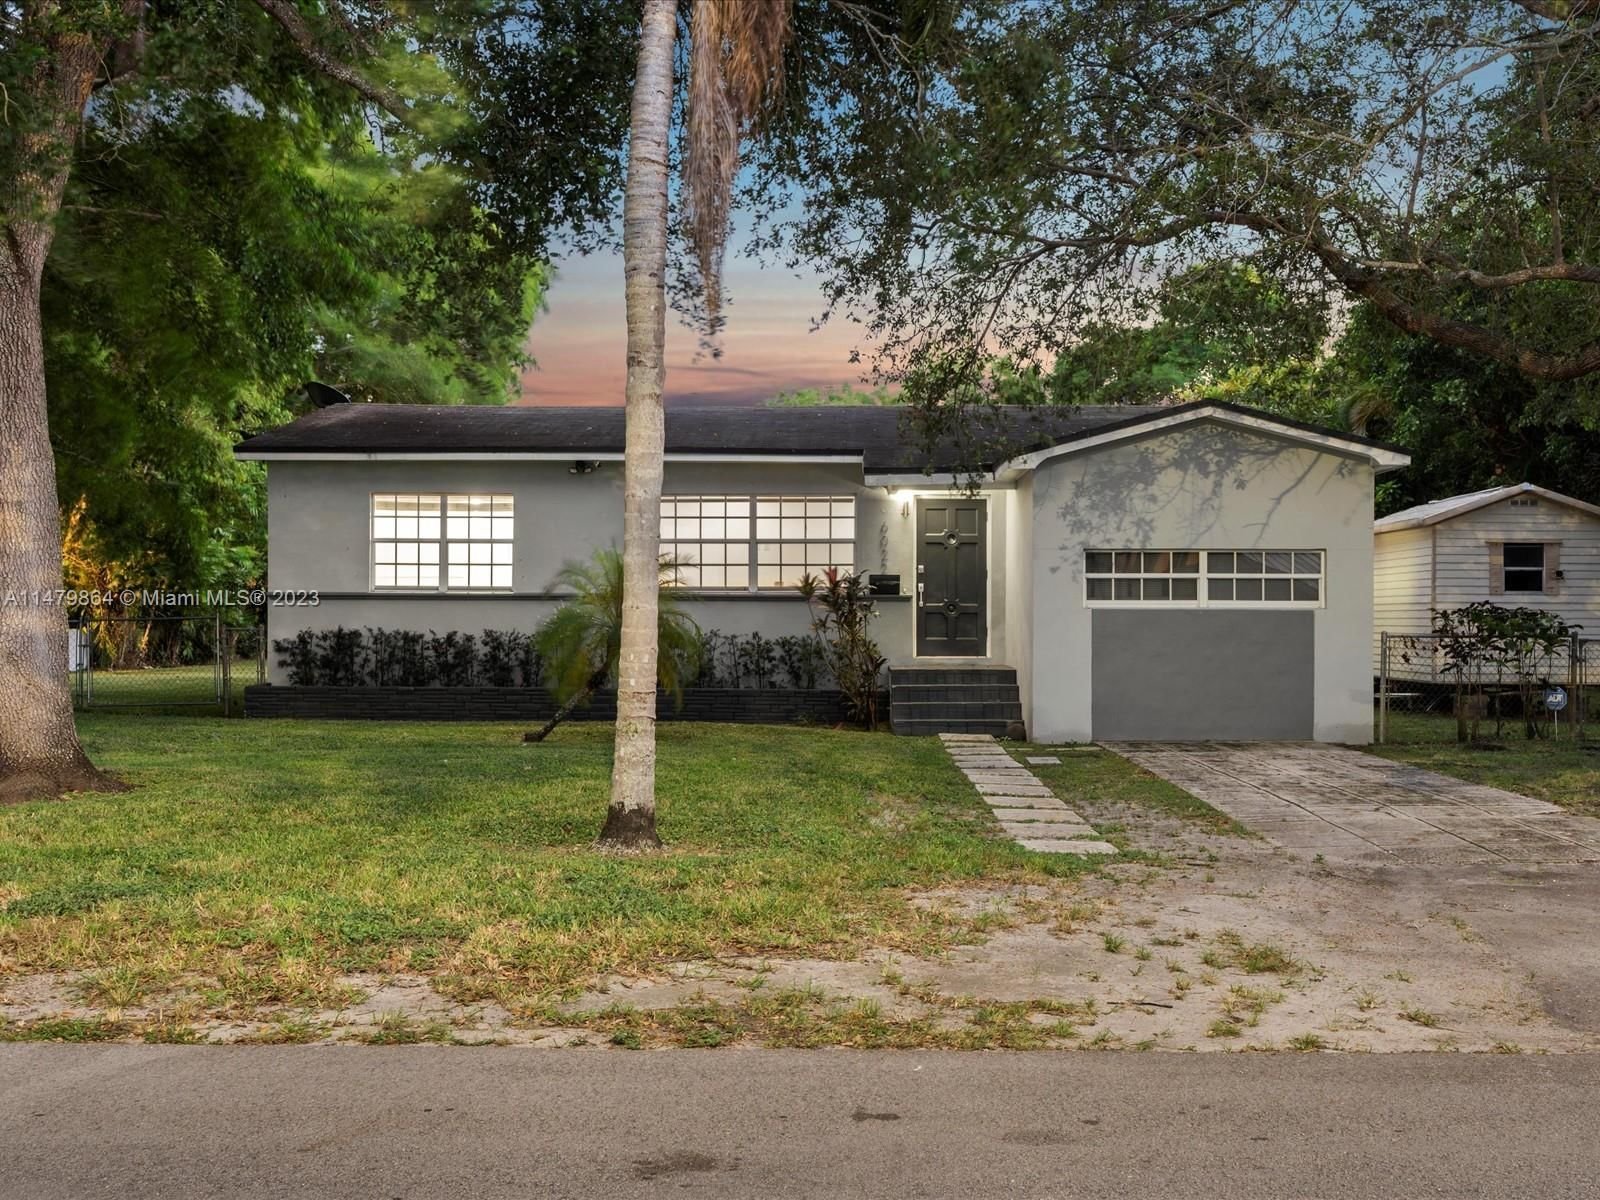 Real estate property located at 6022 58th St, Miami-Dade County, CAMBRIDGE LAWNS PARK, South Miami, FL